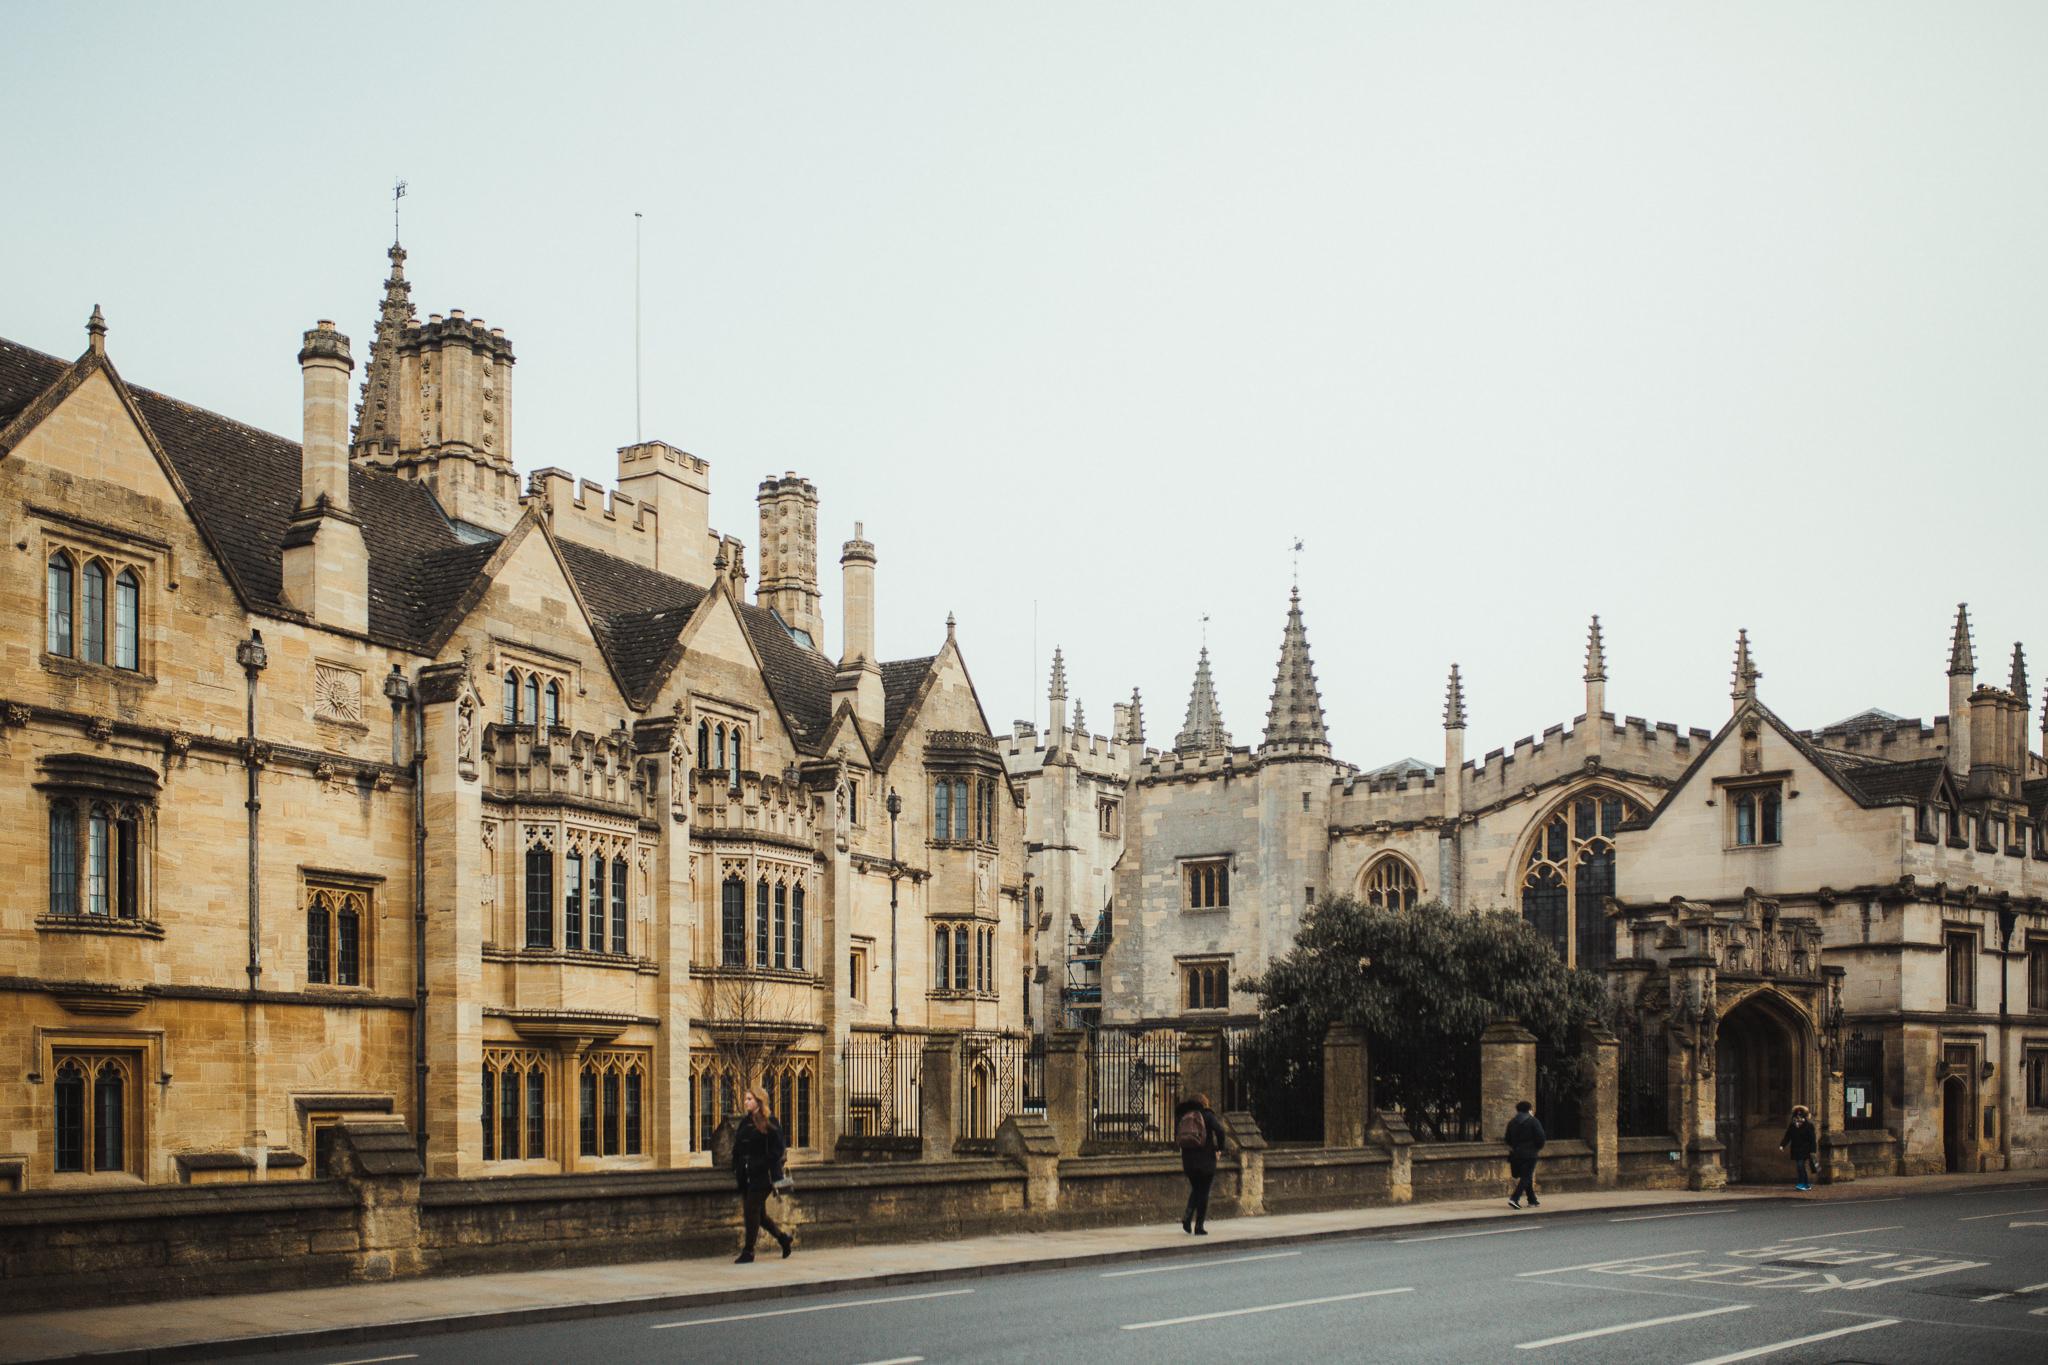   The city of Oxford, which revolves around its prestigious university  